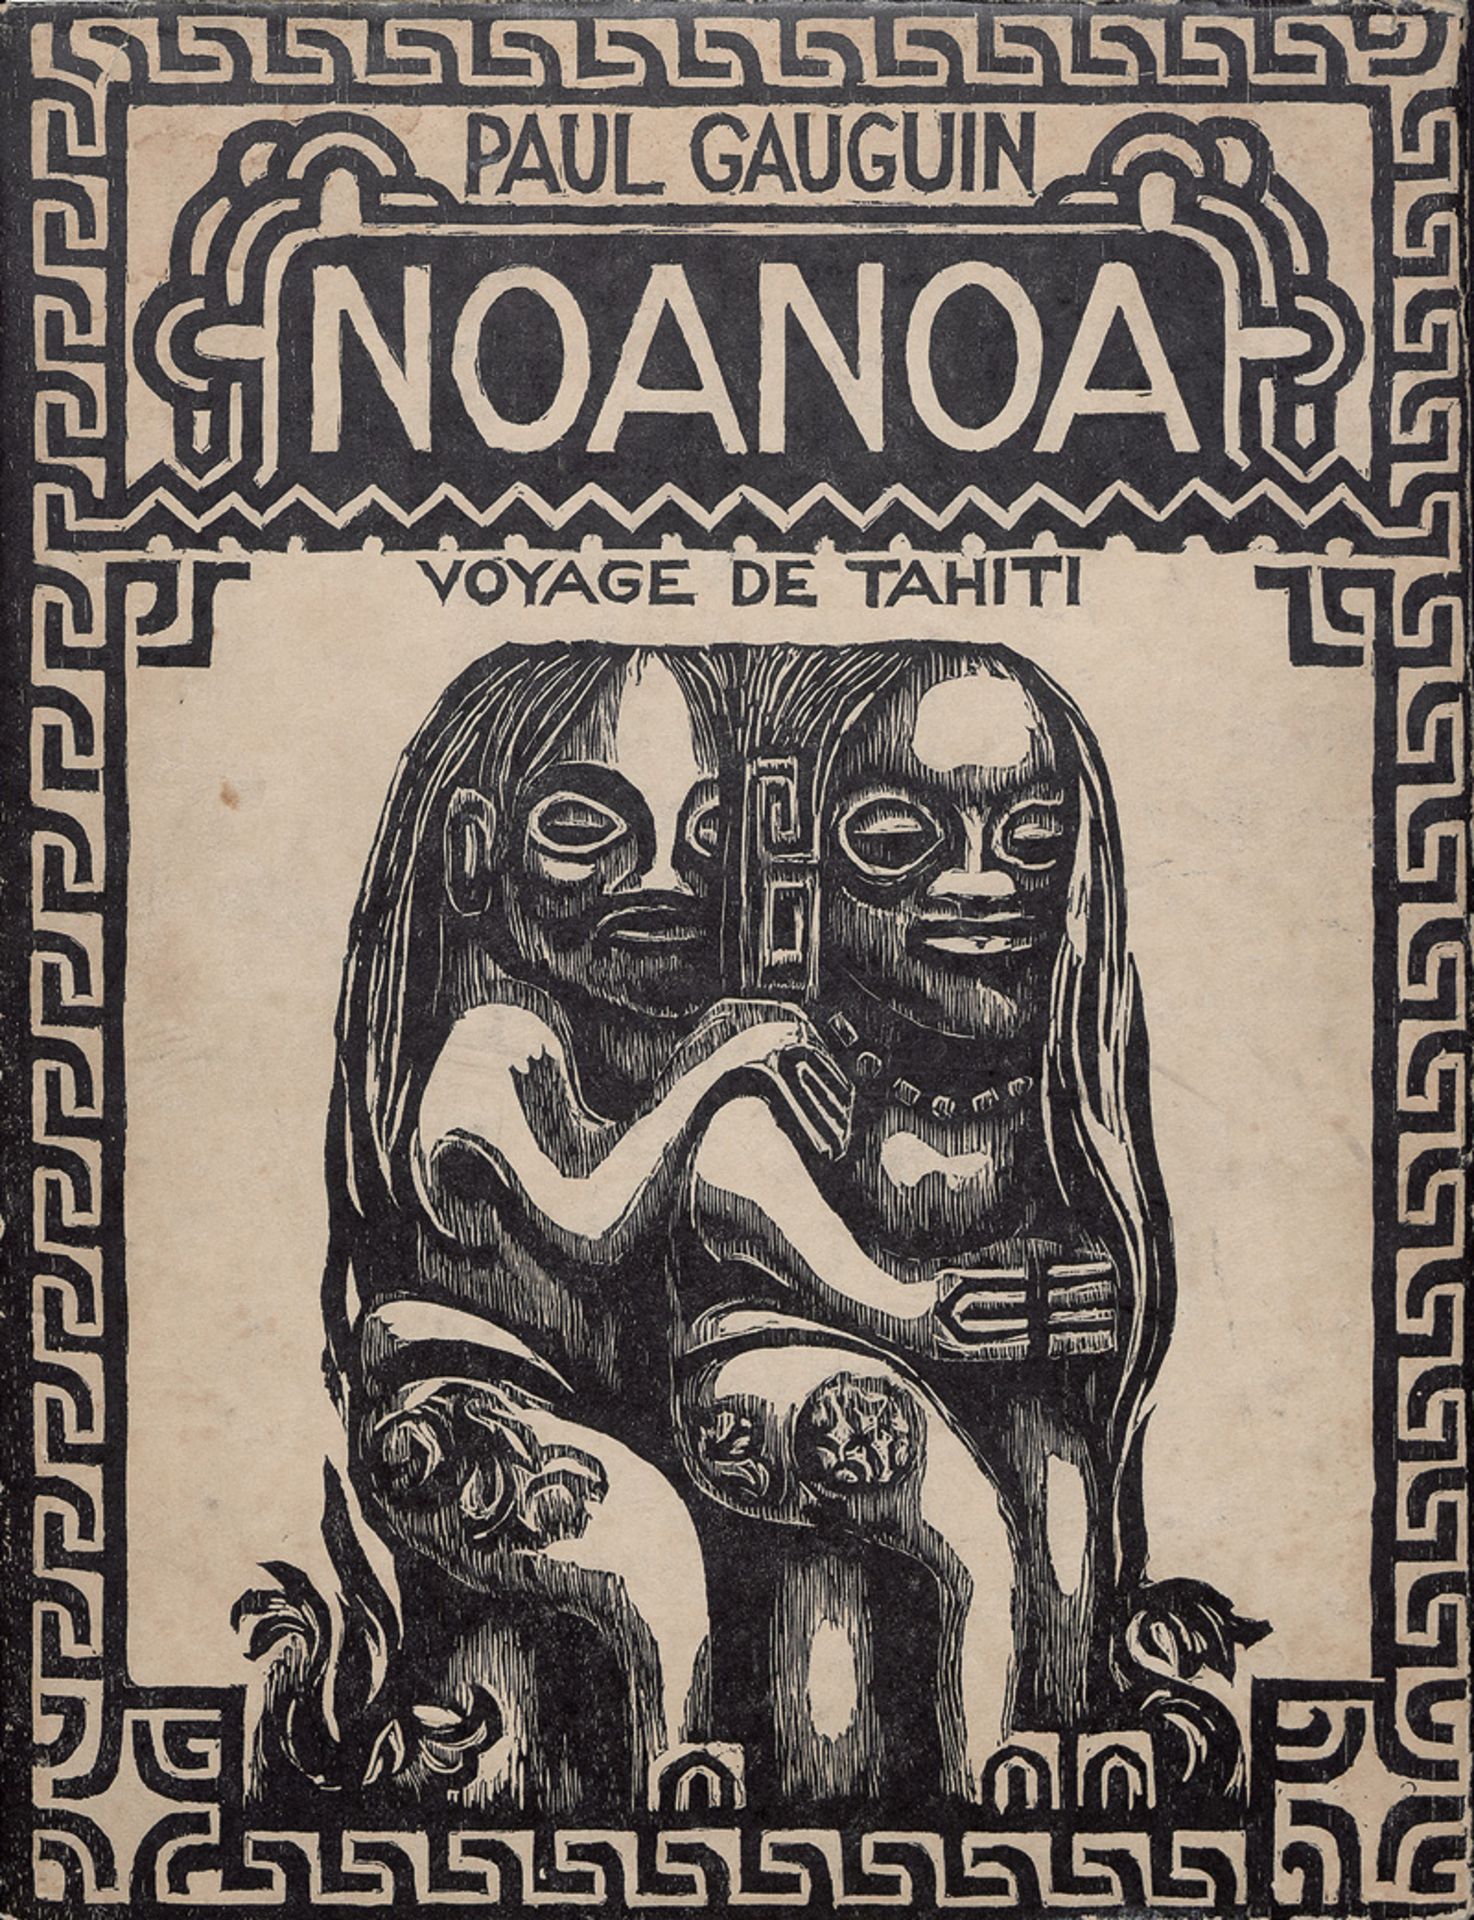 Gauguin, Paul: Noa Noa. Voyage de Tahiti